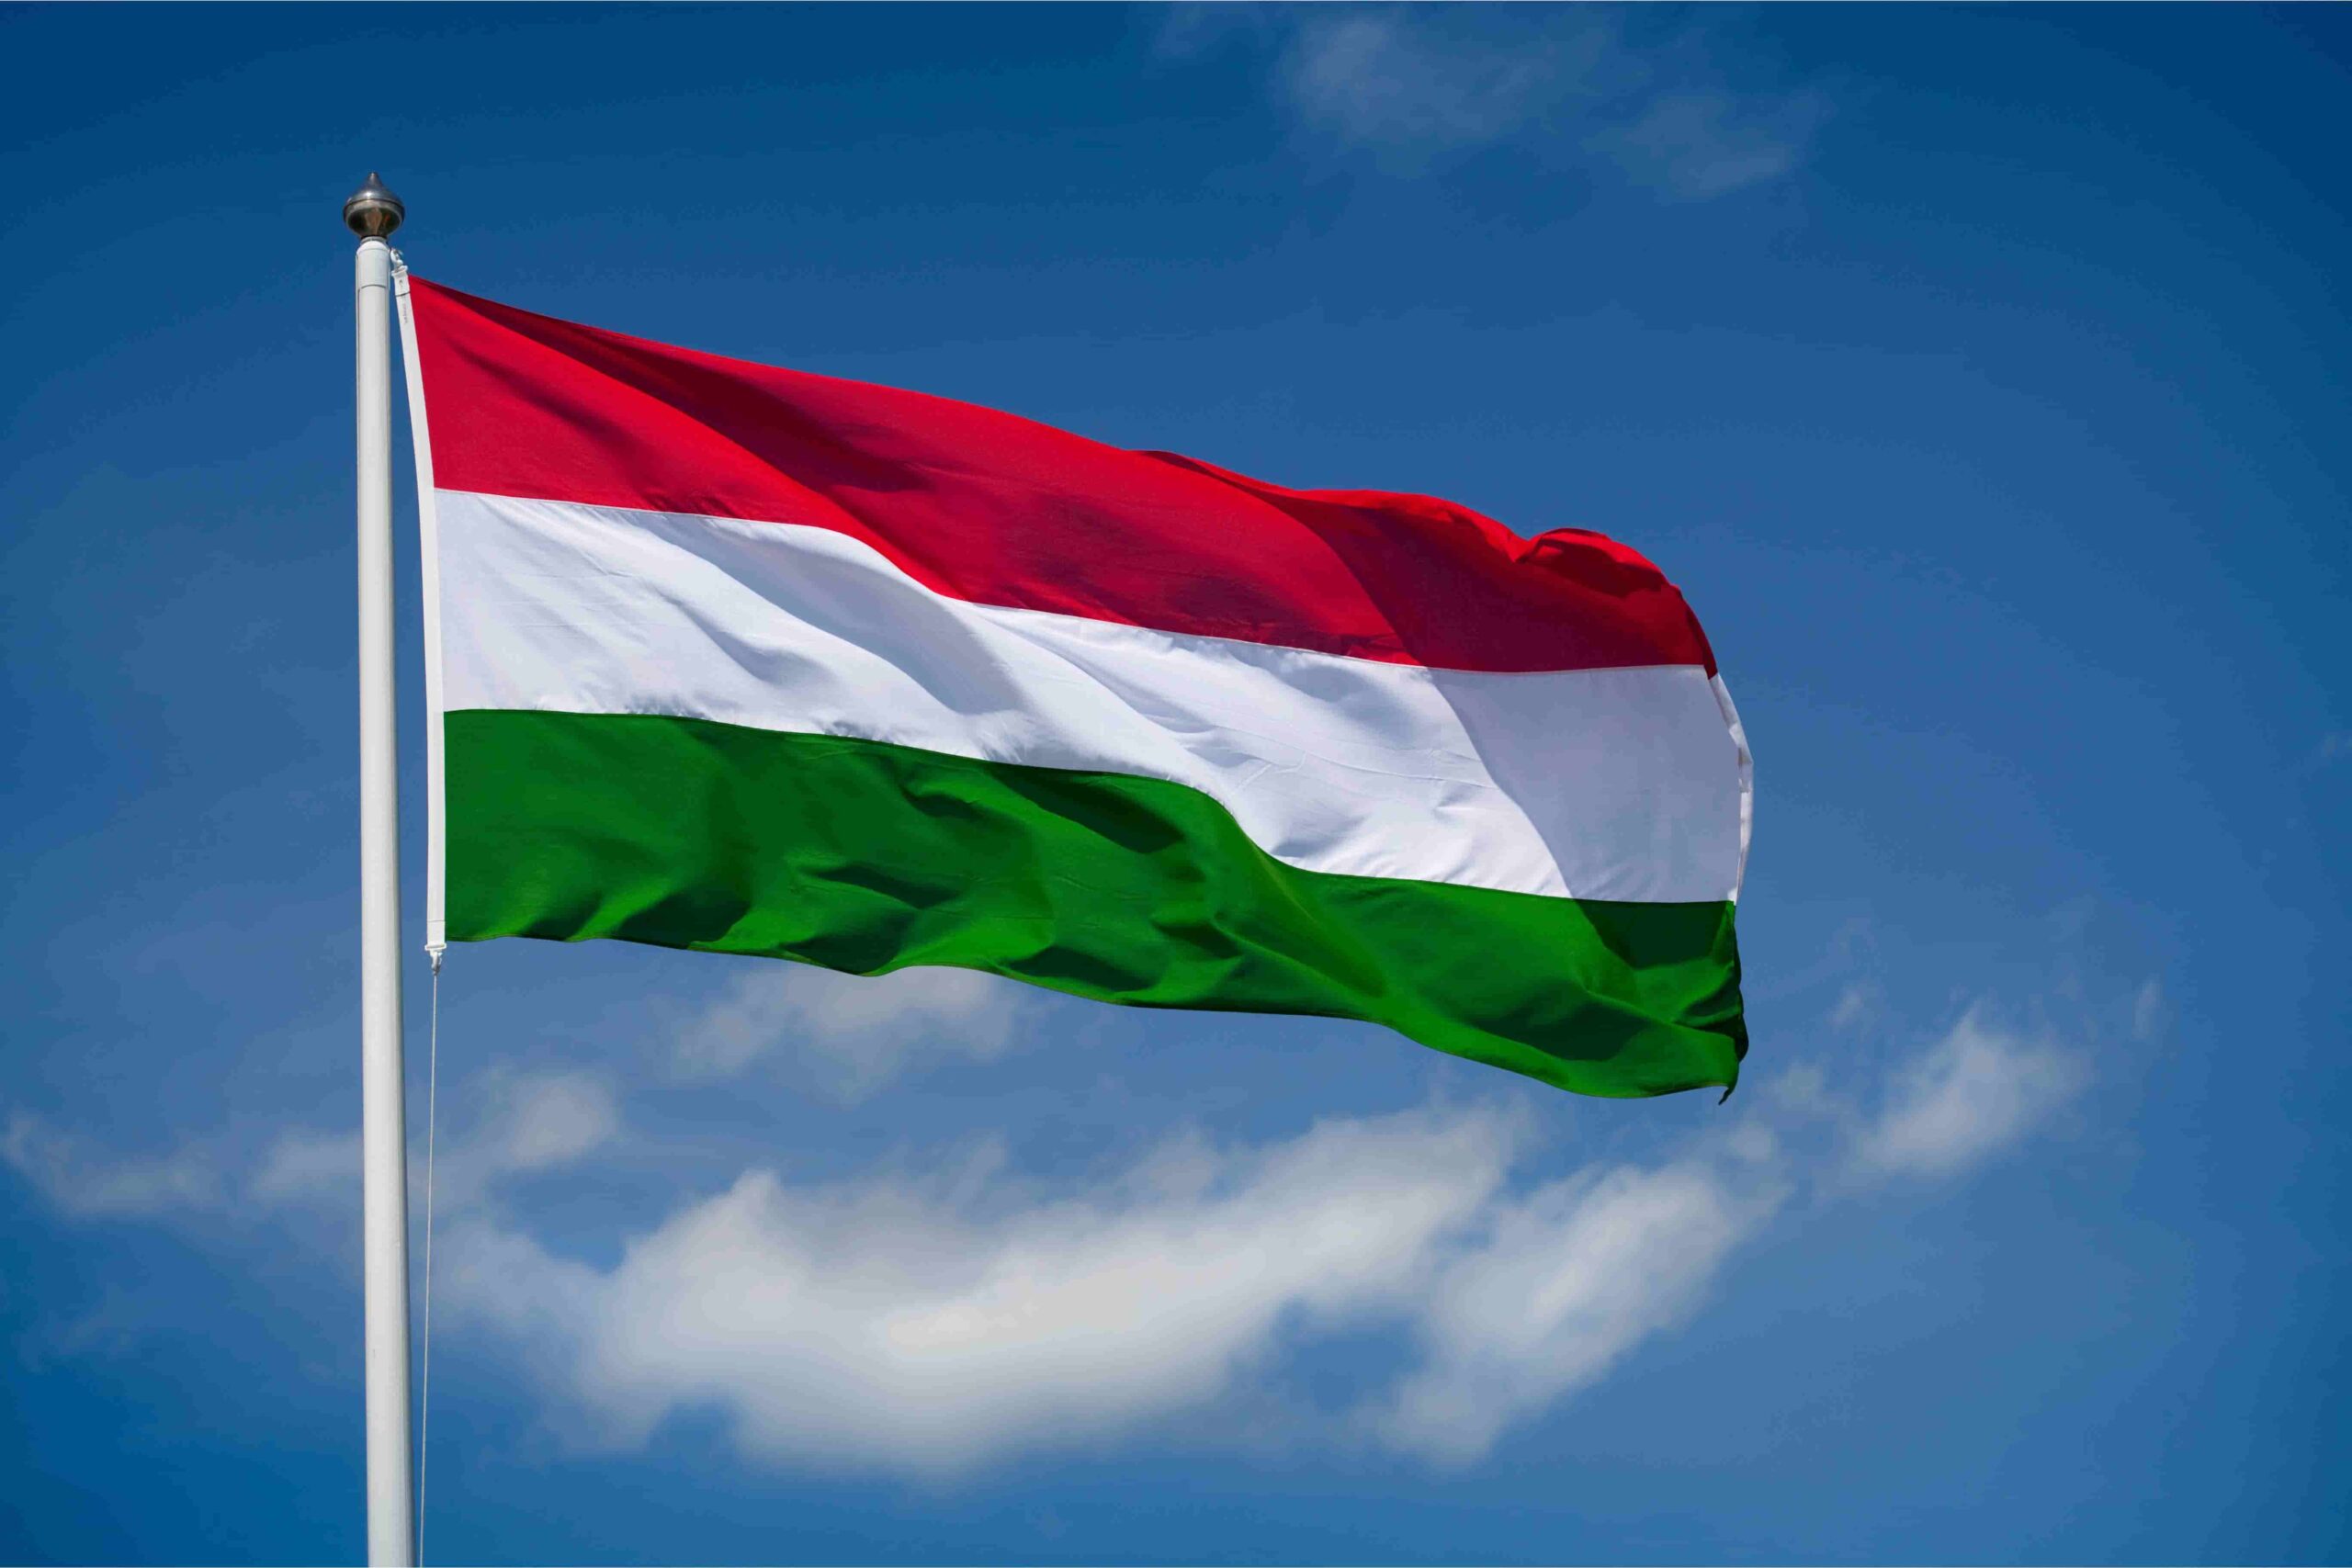 Hungary Golden Visa Returns as Guest Investor Program on July 1